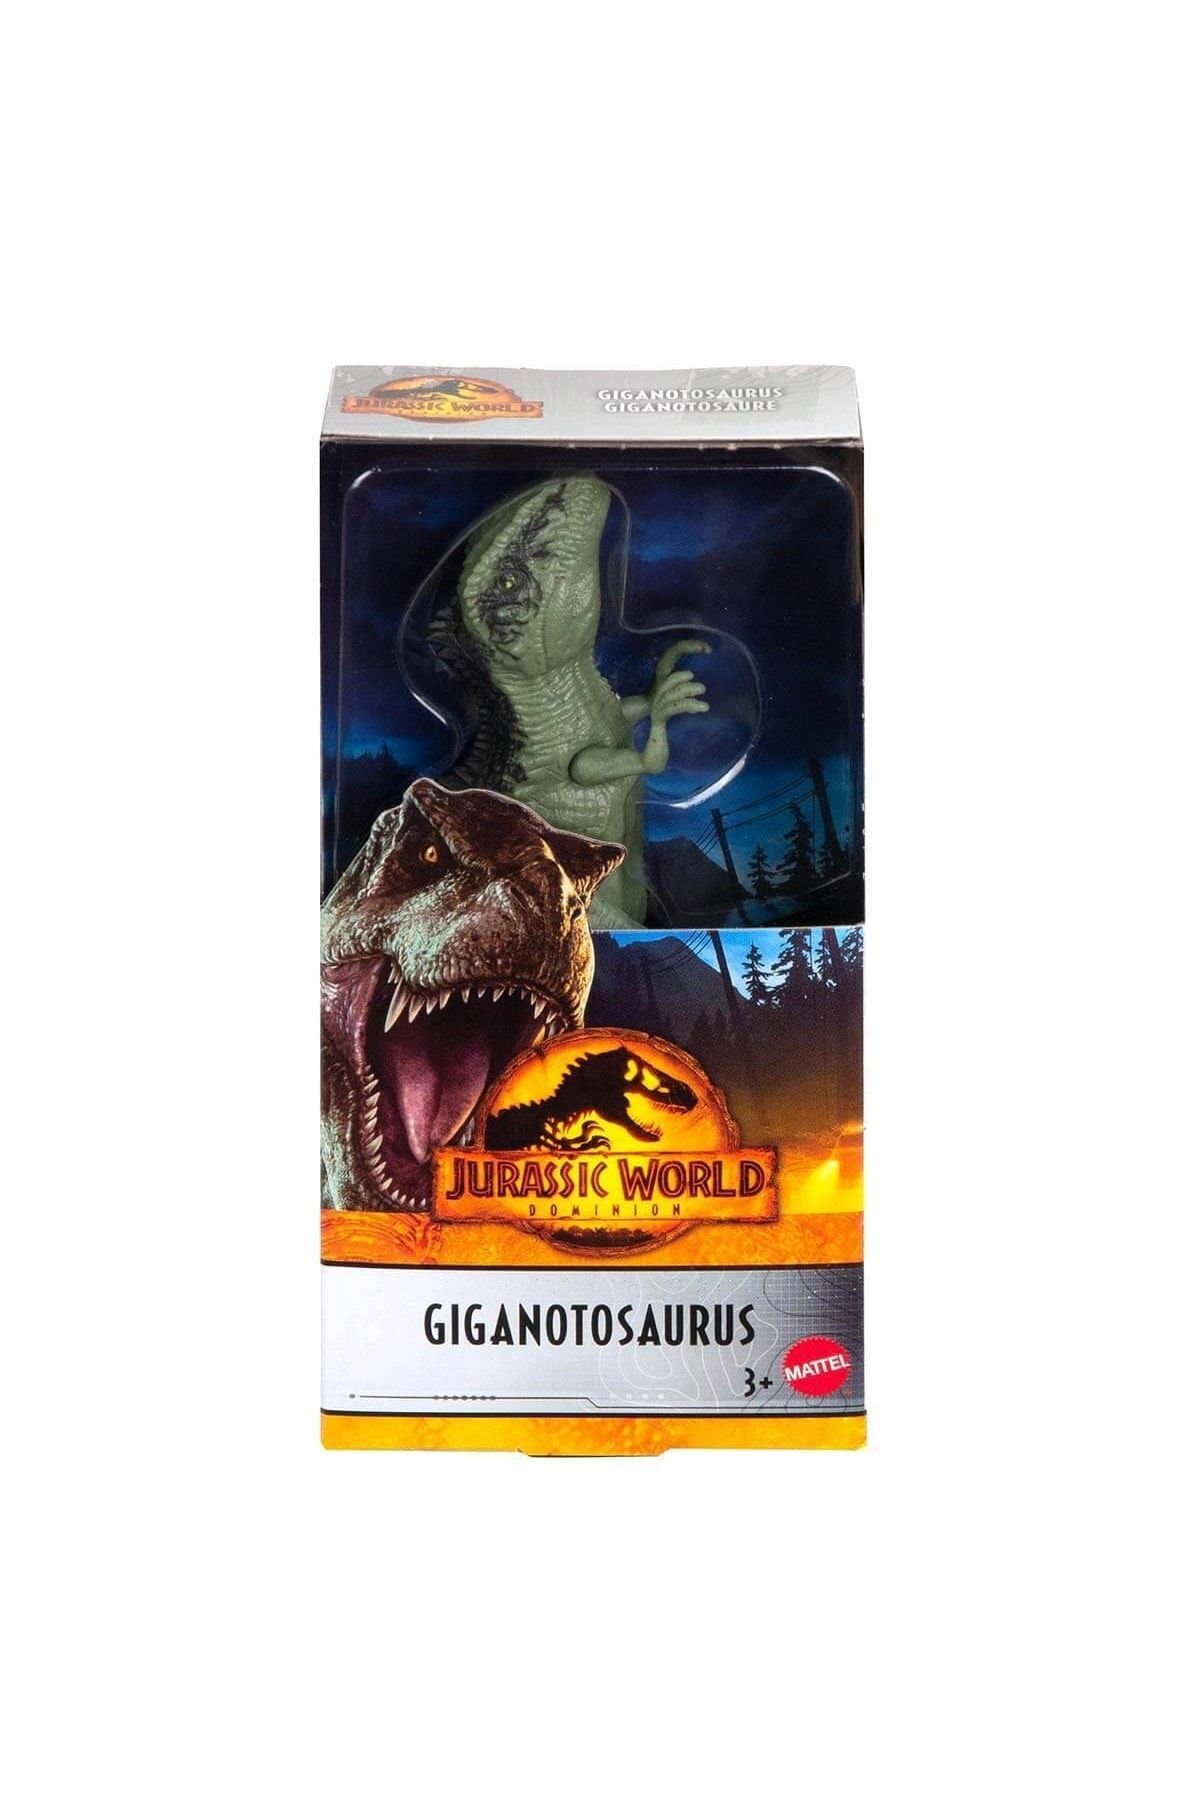 Jurassic World 6' Dinozor Figürü Gwt49 - Giganotosaurus